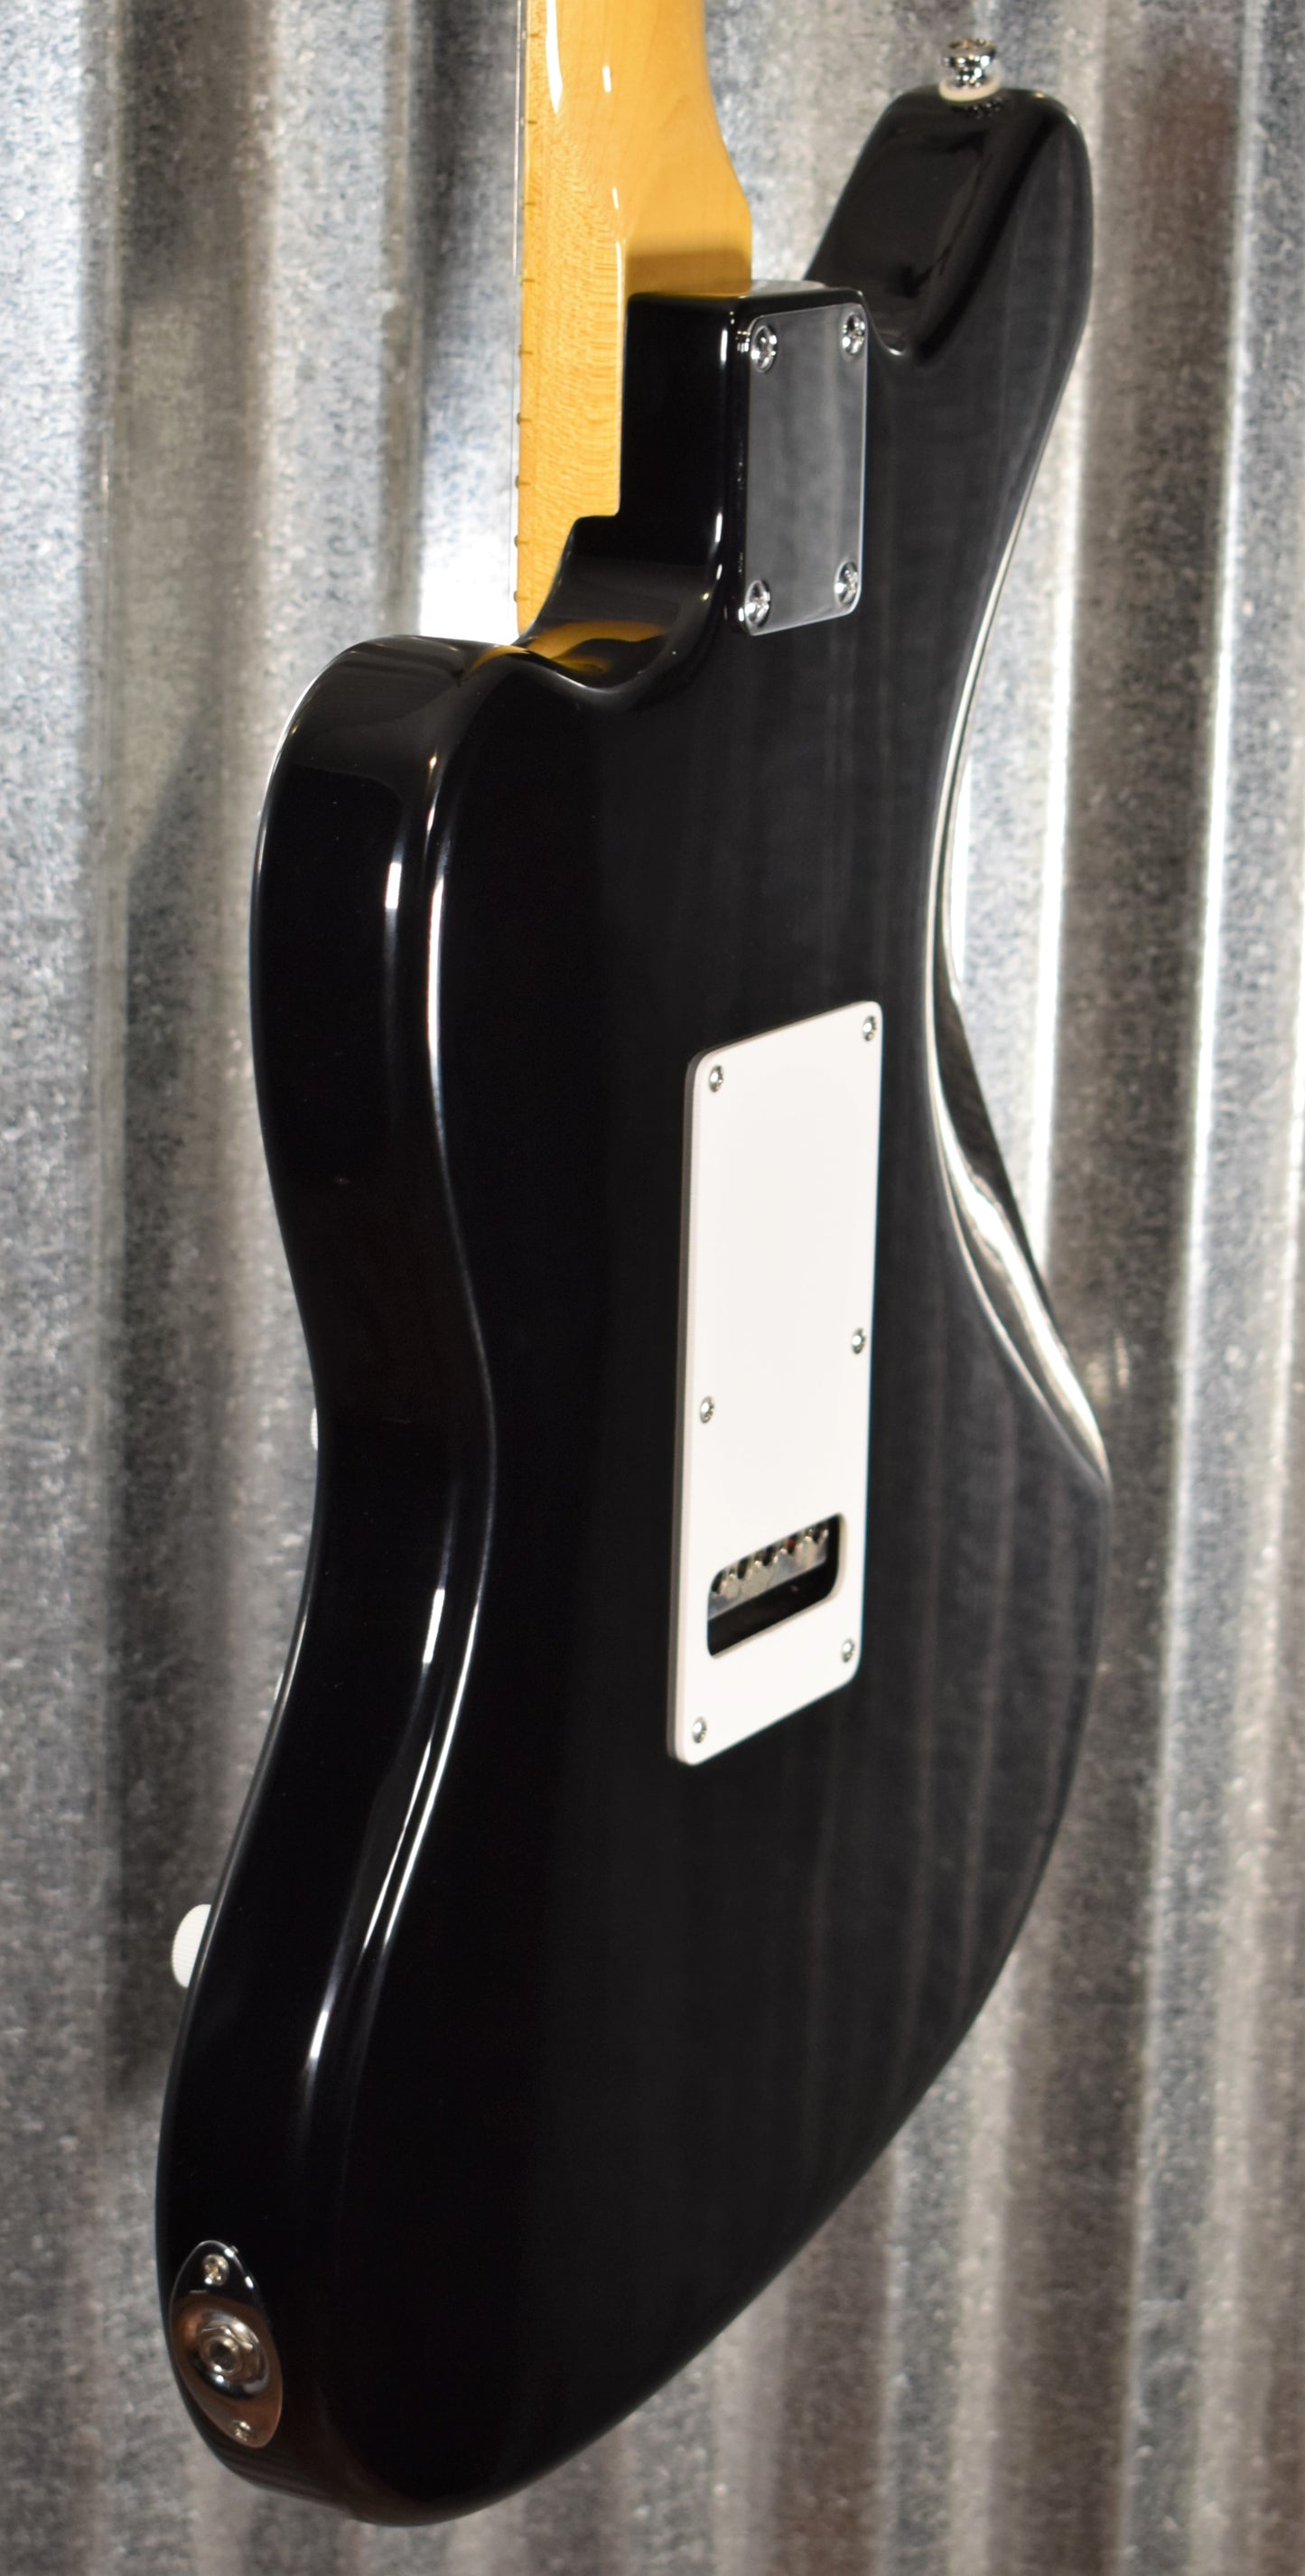 G&L Tribute Doheny Gloss Black Guitar #1846 Demo